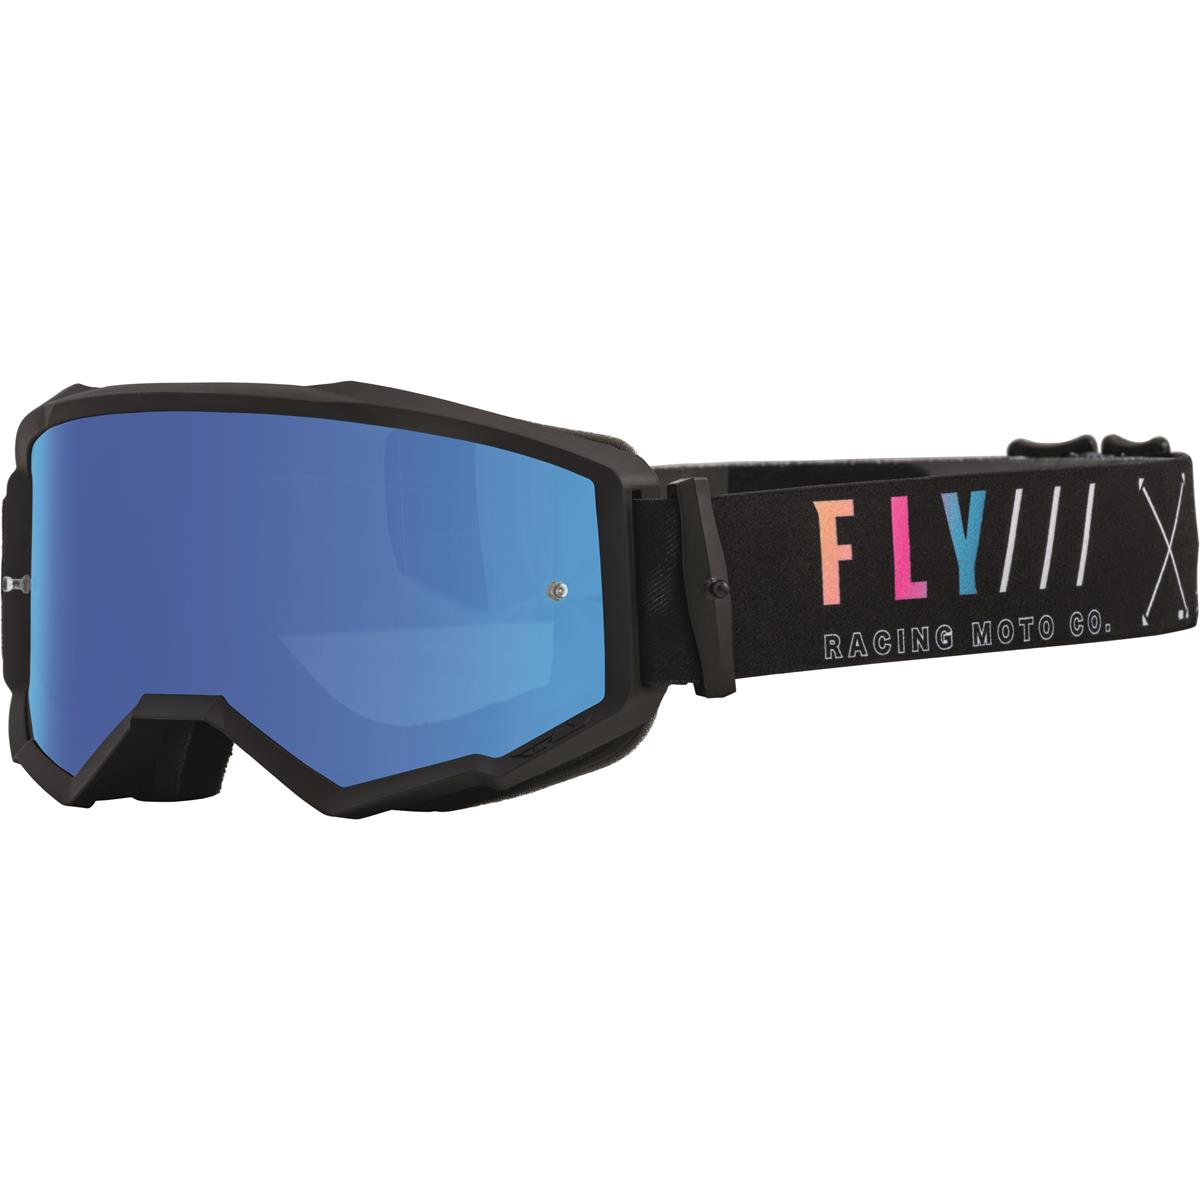 Fly Racing Goggle Zone SE Avenger - Black/Sunset, Mirror Lens